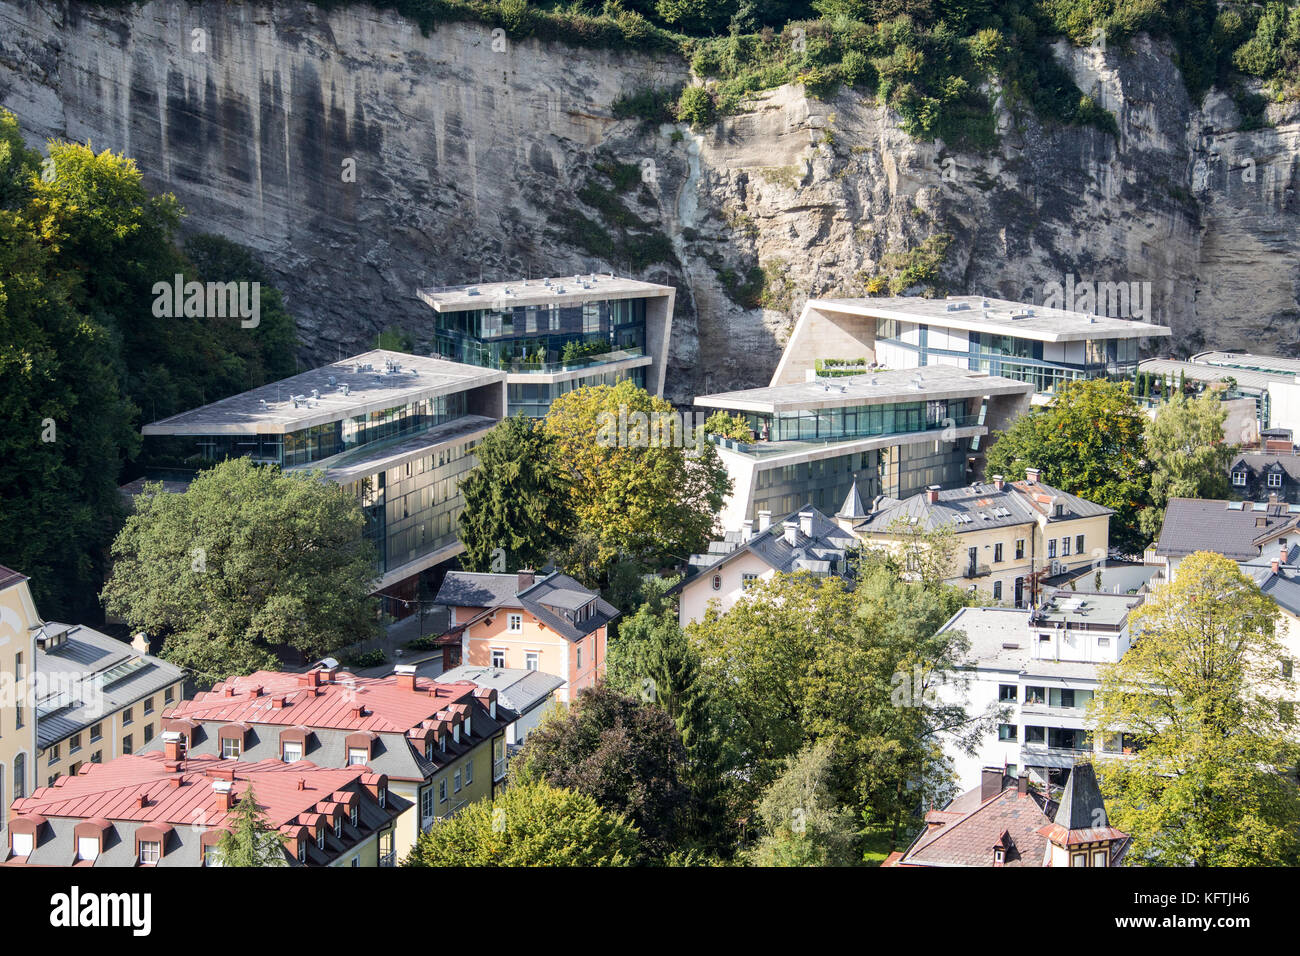 Jewels of Salzburg, Housing development designed by Hariri and Hariri Architecture, Salzburg, Austria Stock Photo